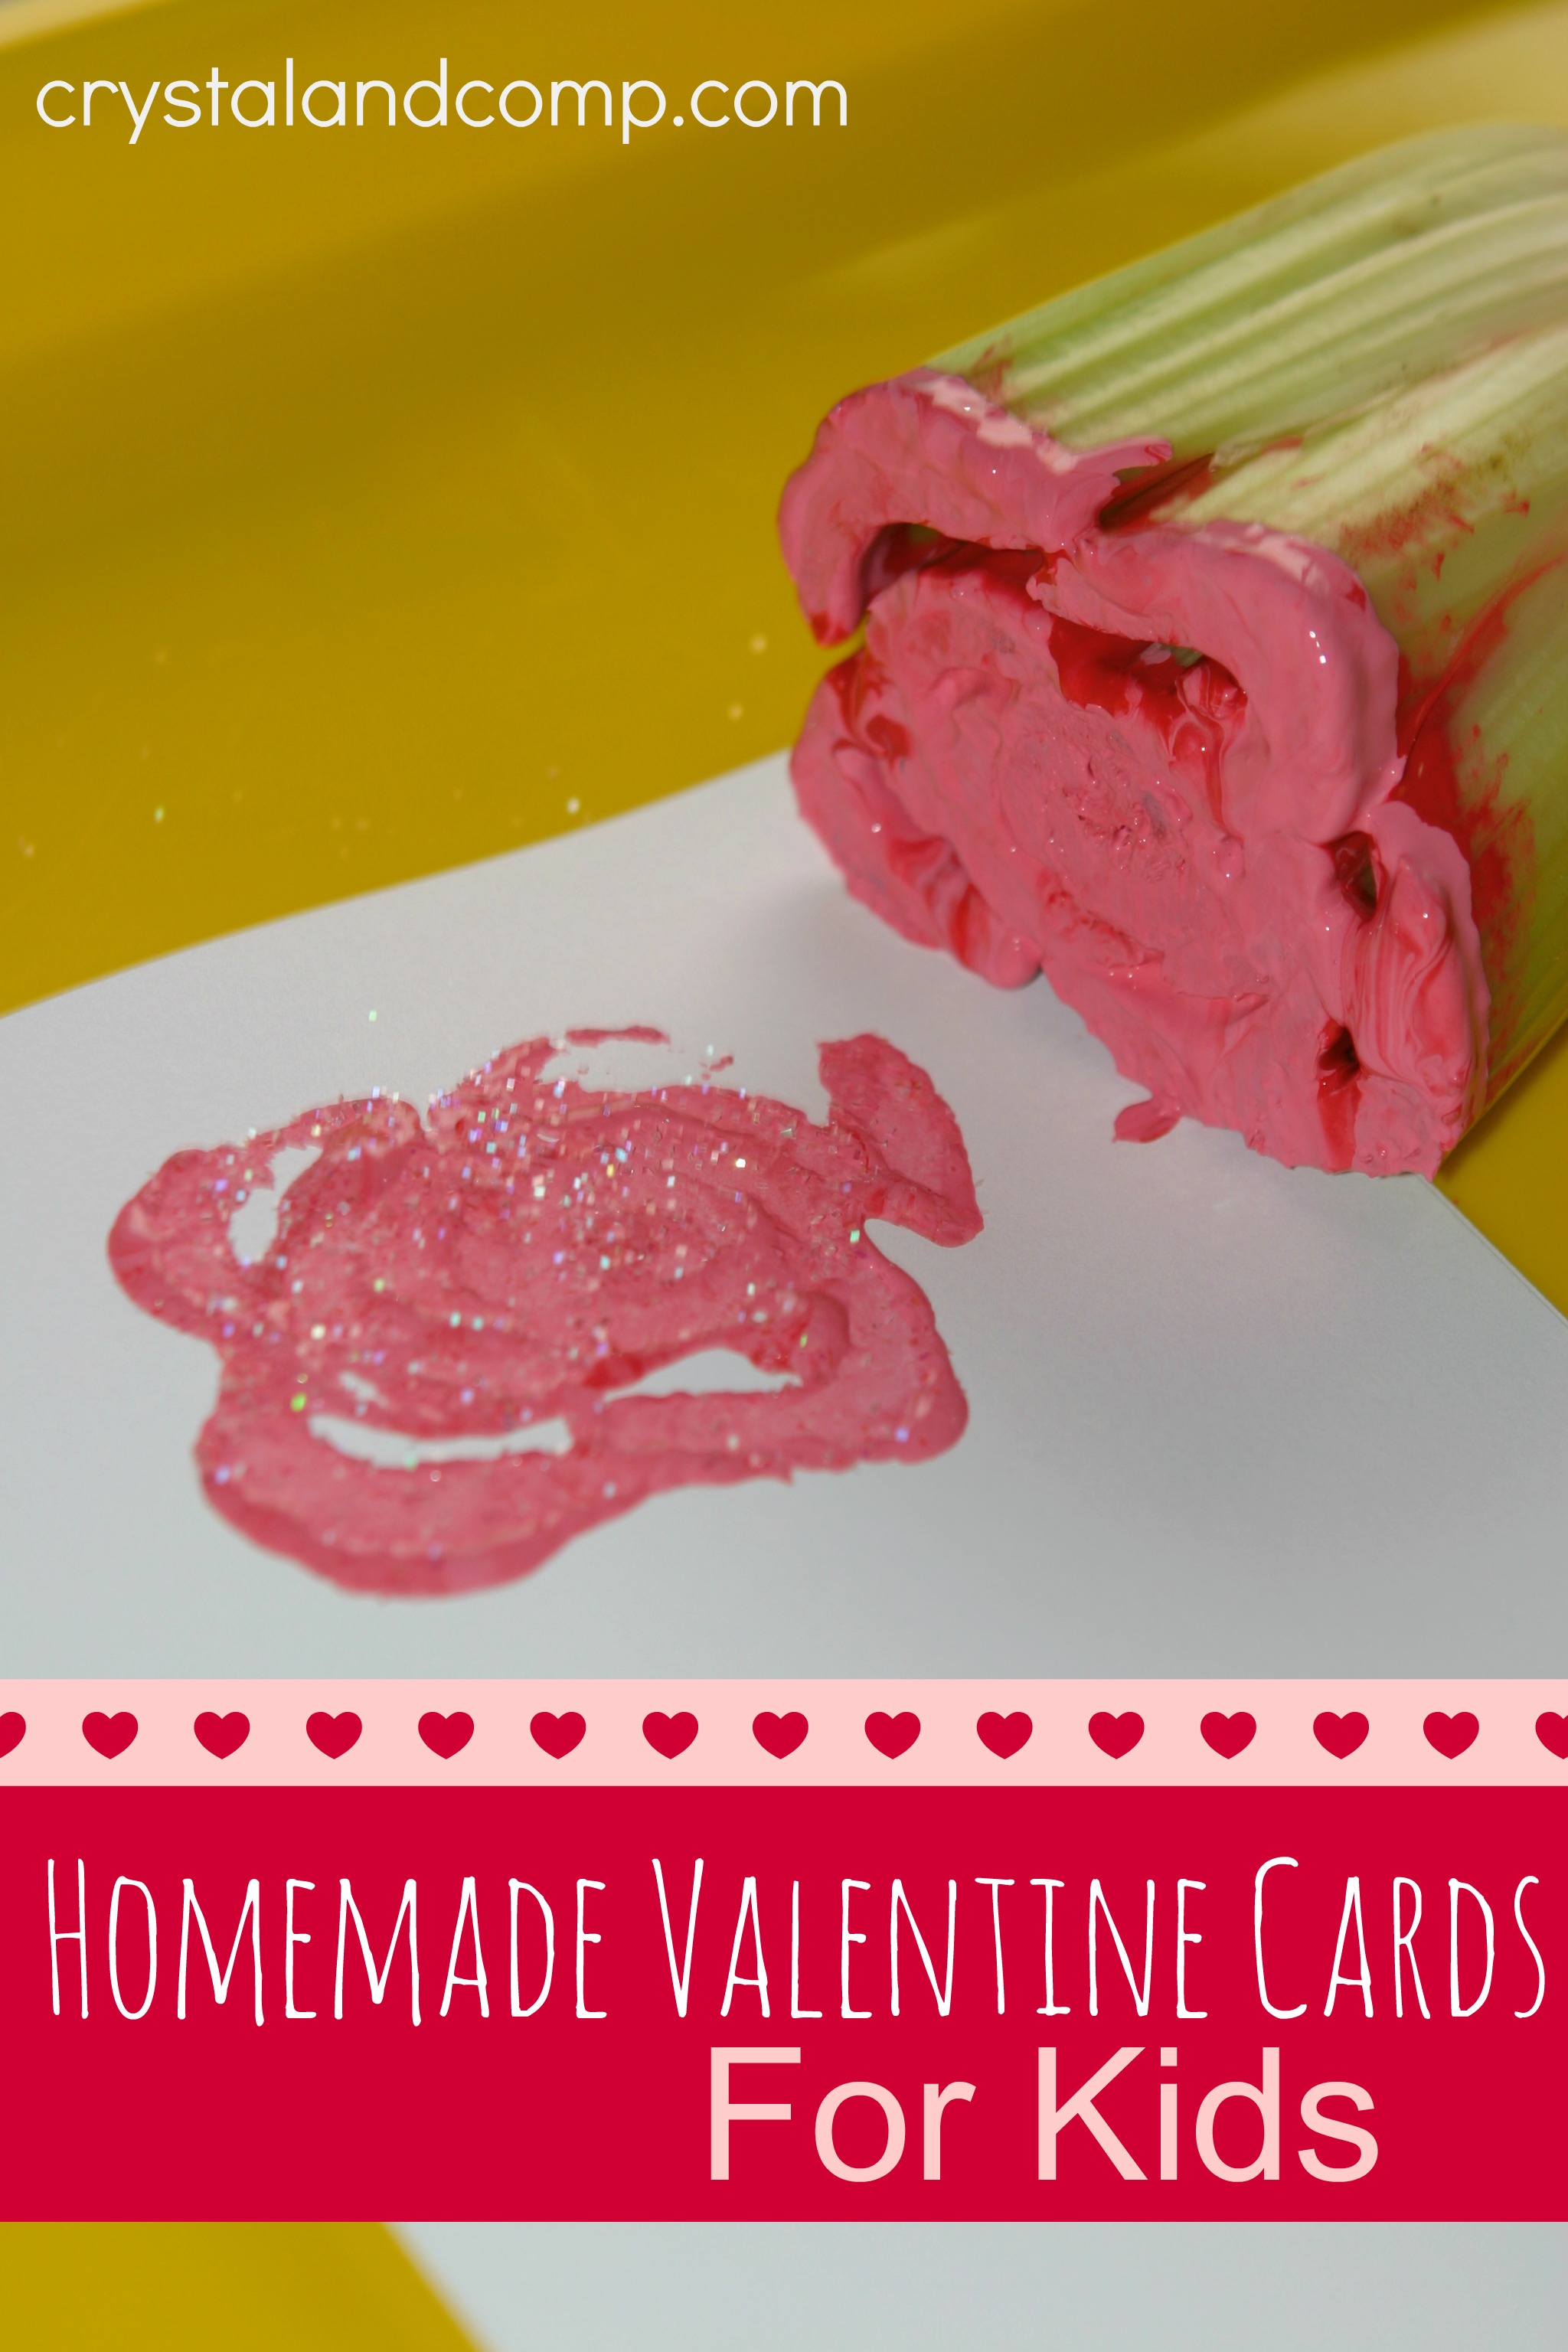 Homemade Valentine Cards for Kids